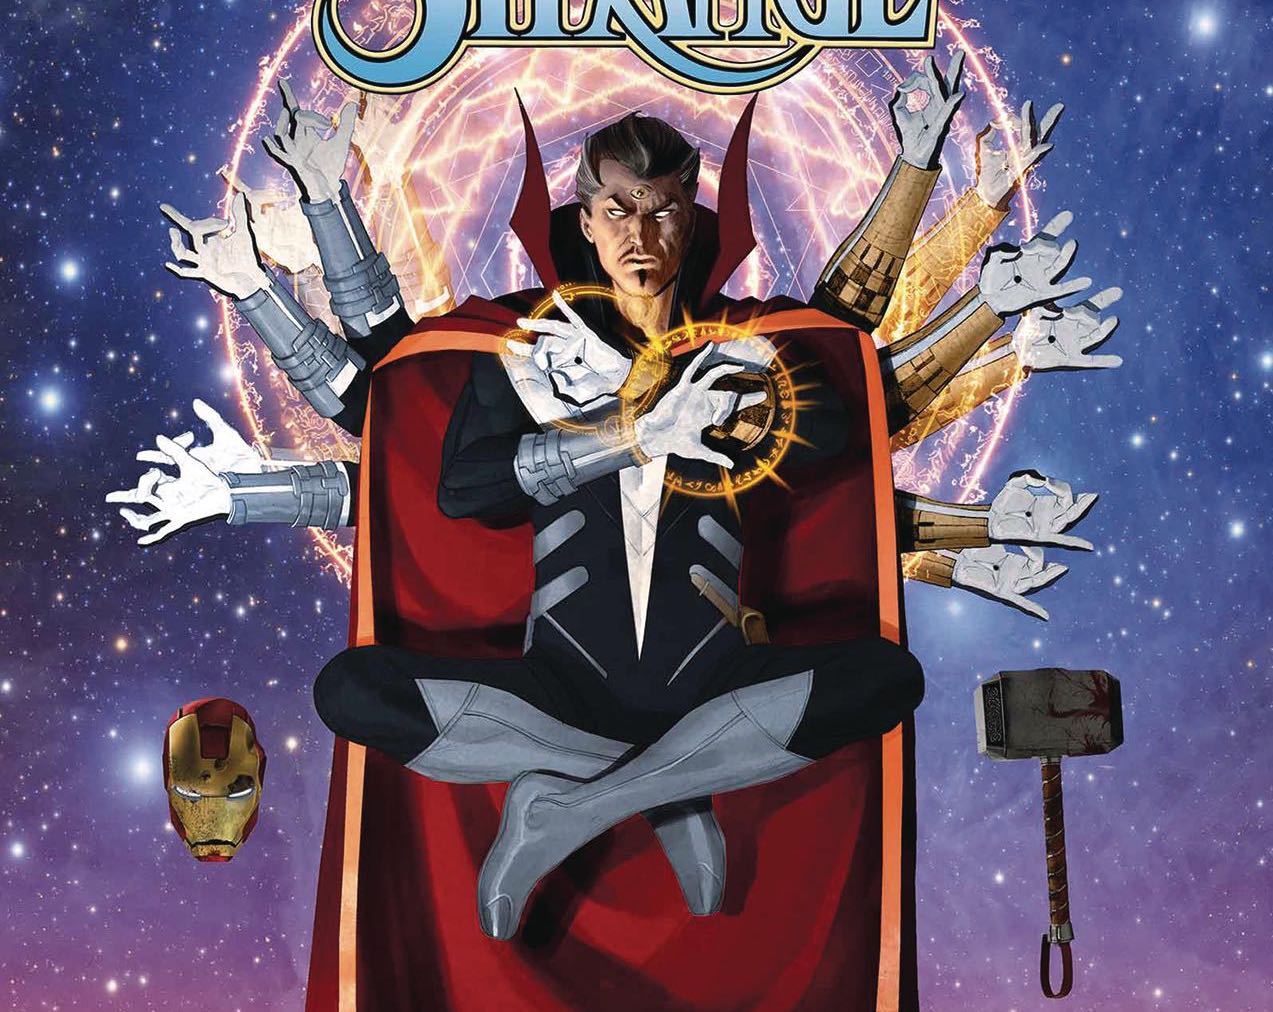 Doctor Strange #3 review